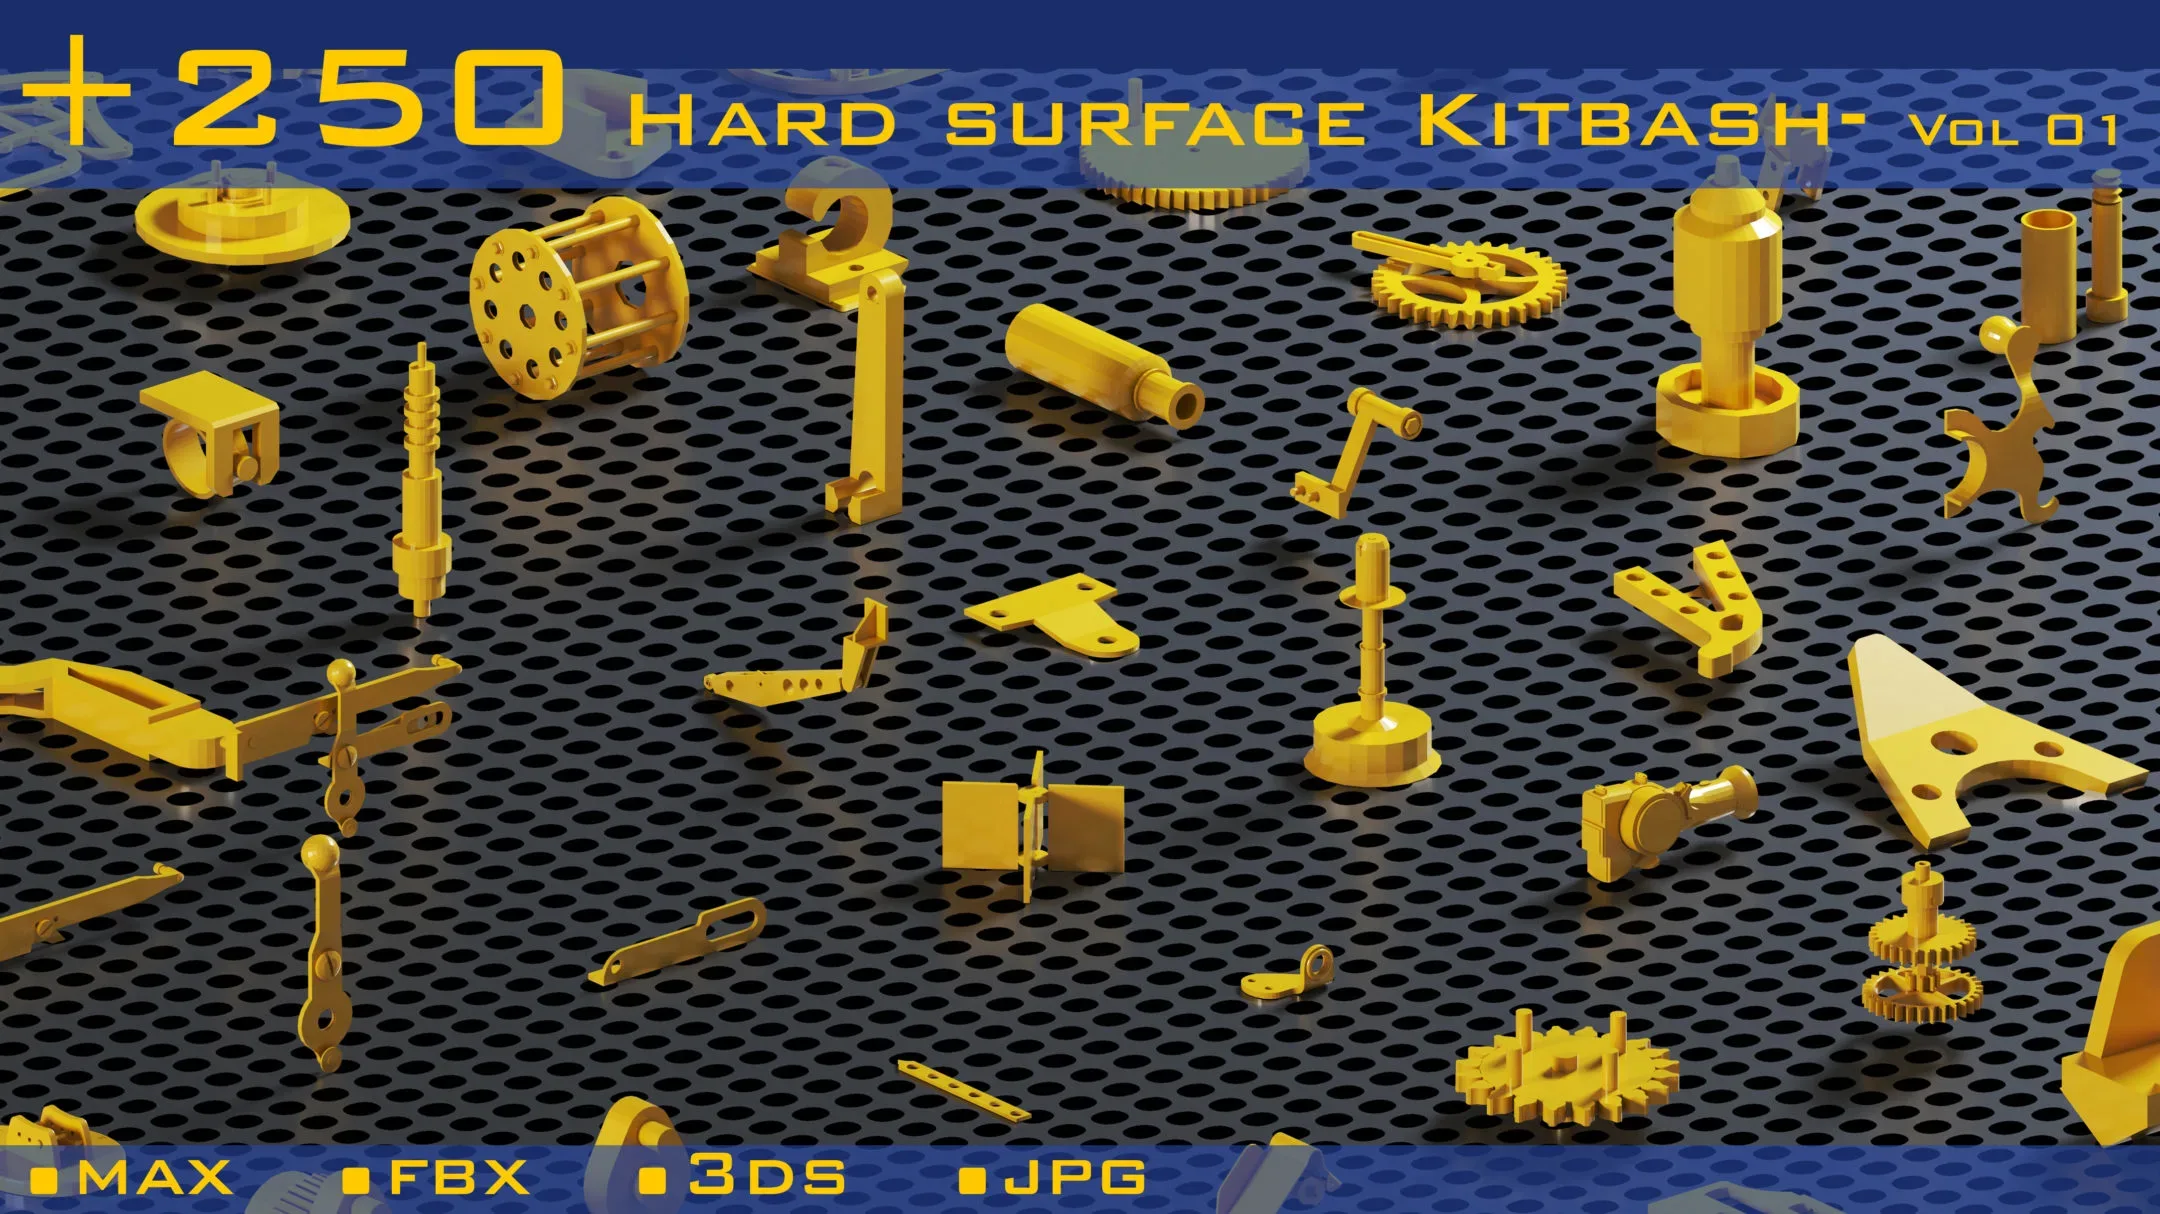 +250 Hard surface-kitbash-Vol 01